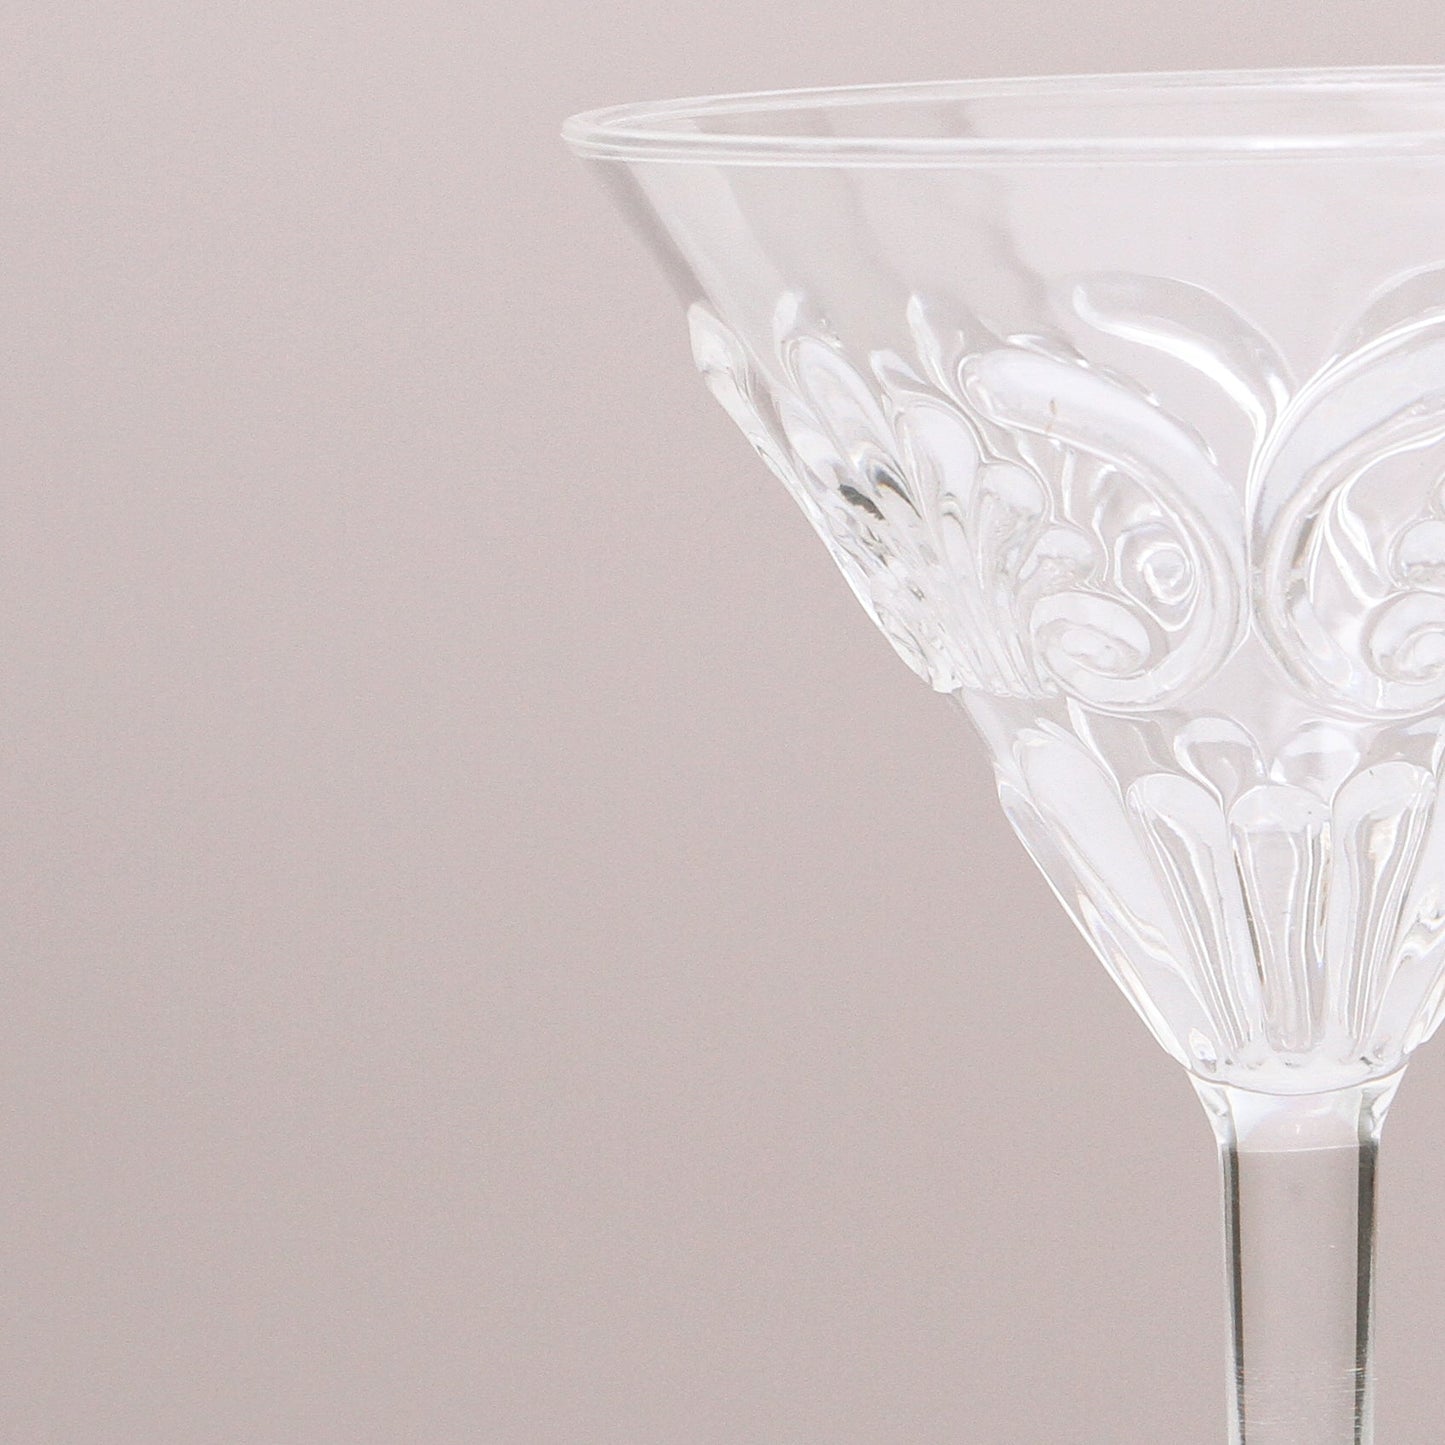 Flemington Acrylic Martini Glass